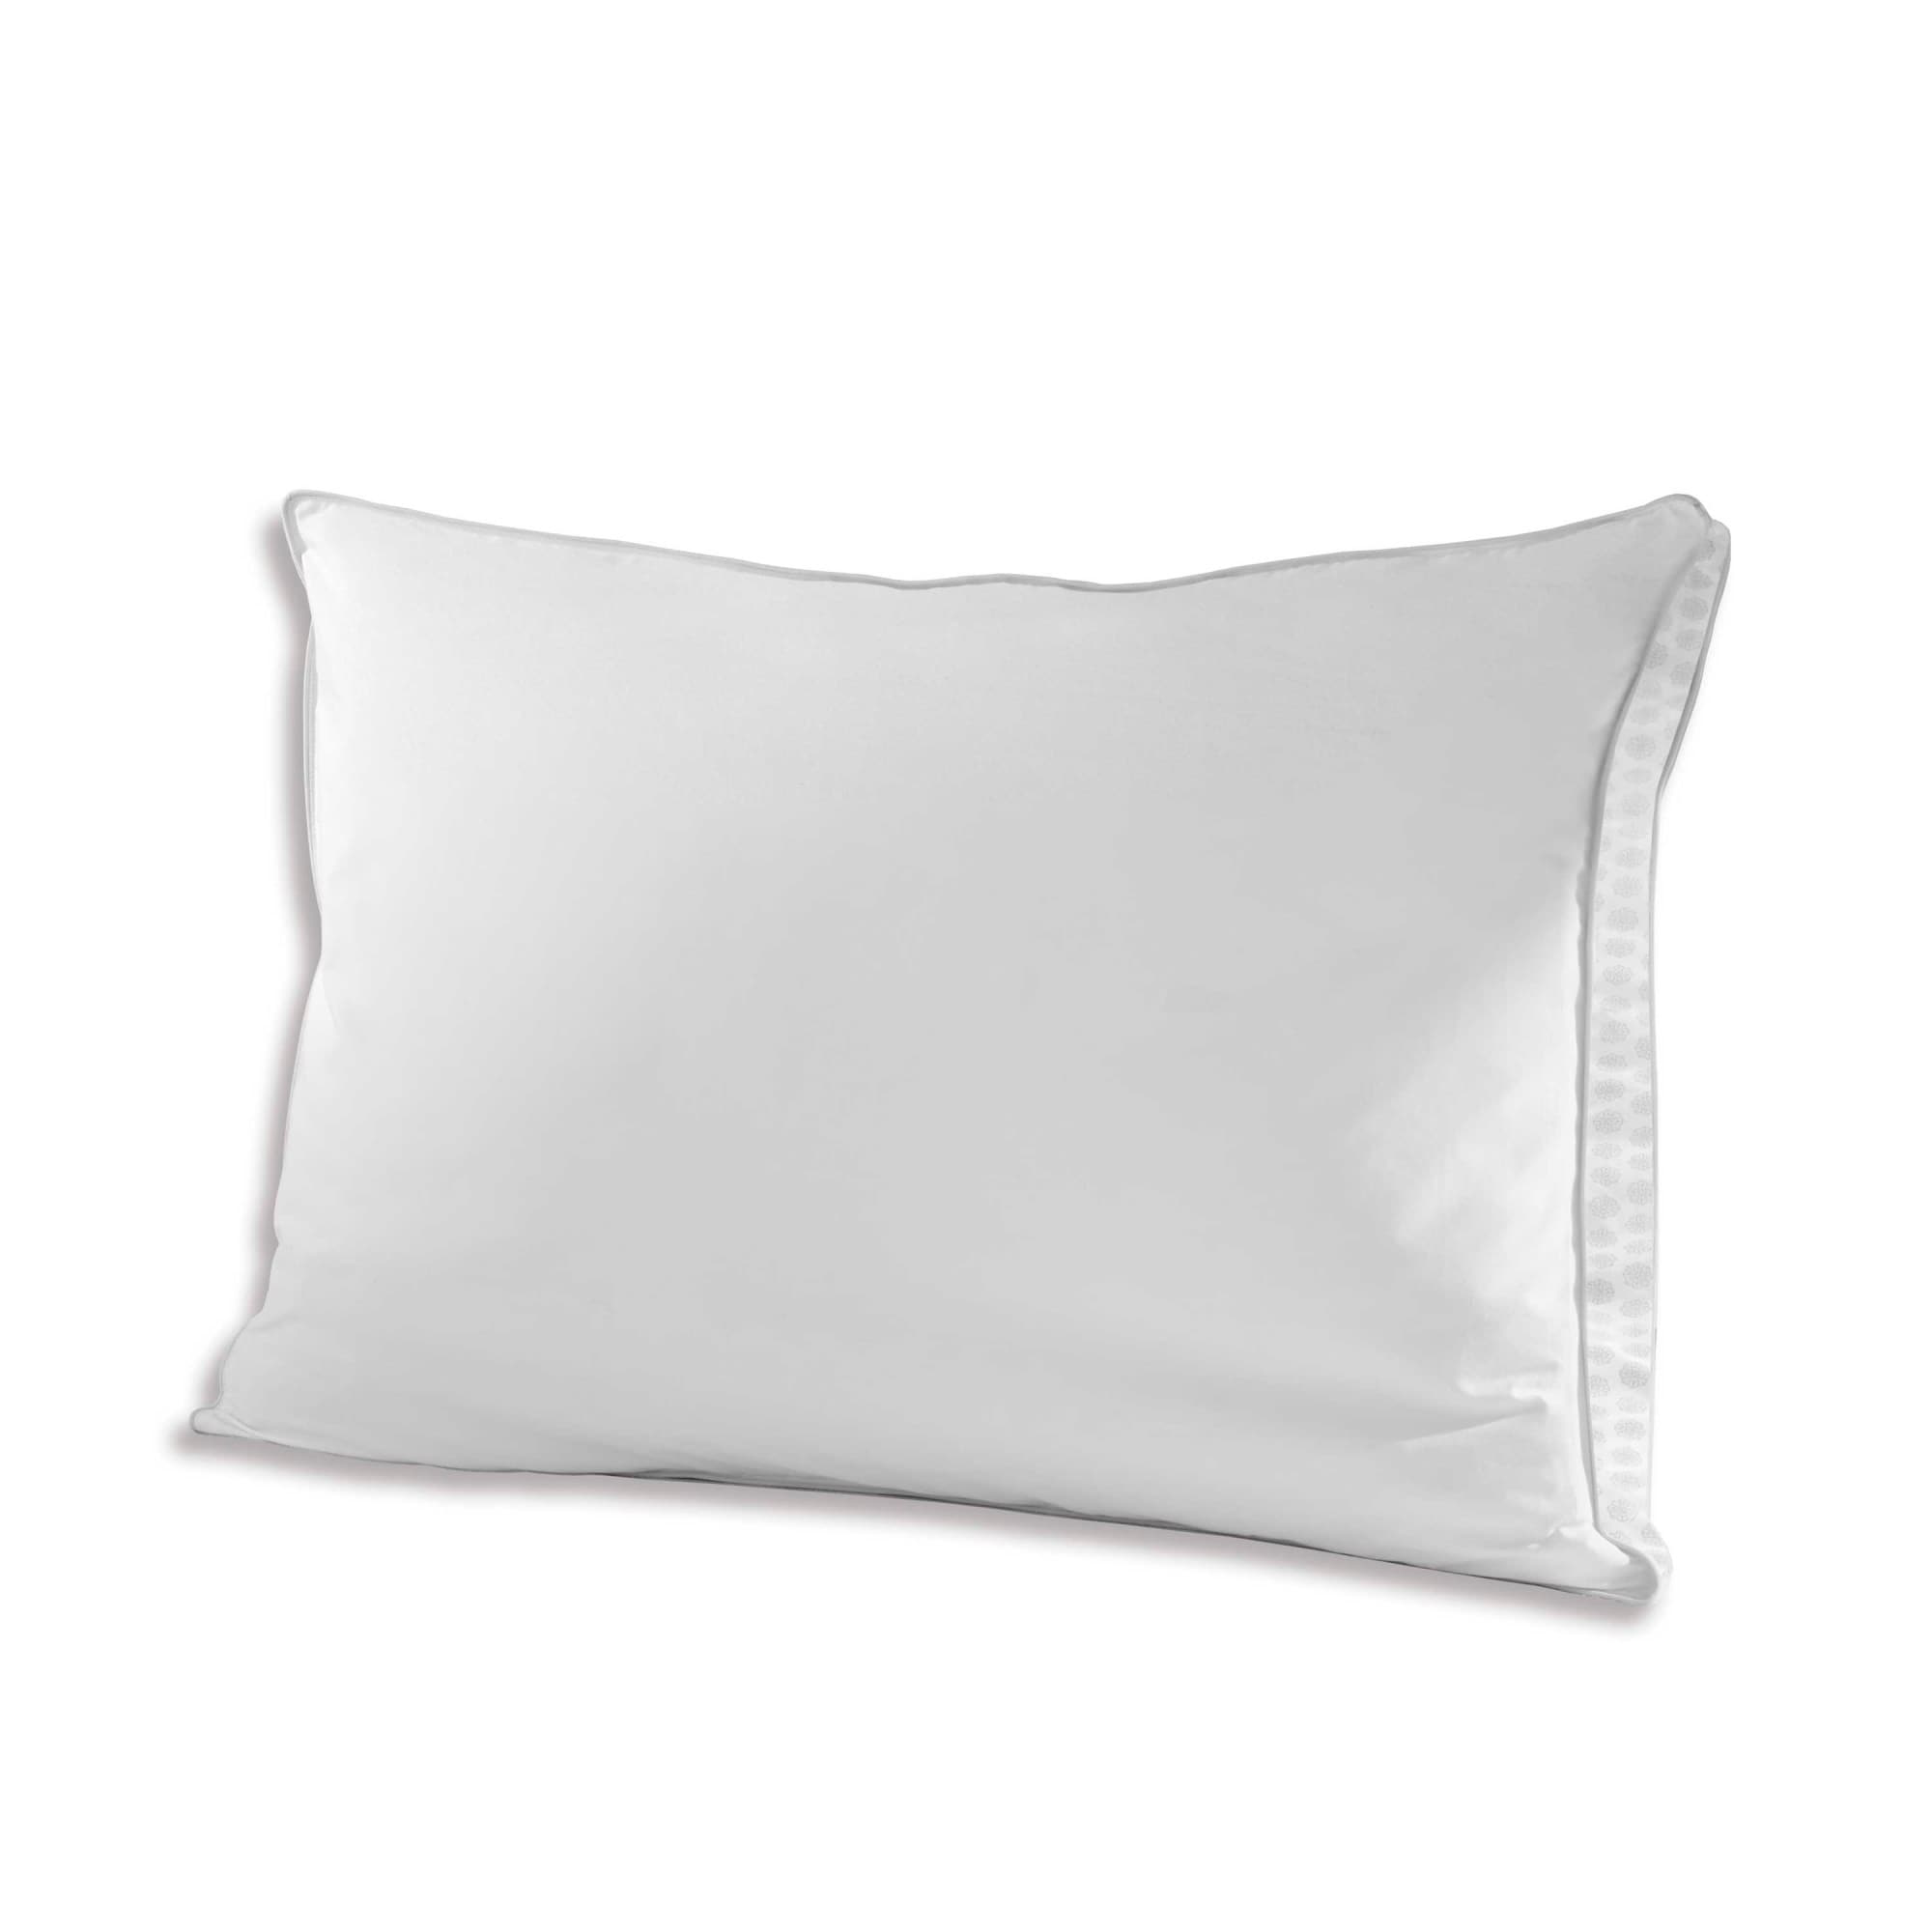 Elite Down Alternative Water Pillow, Single Pillow